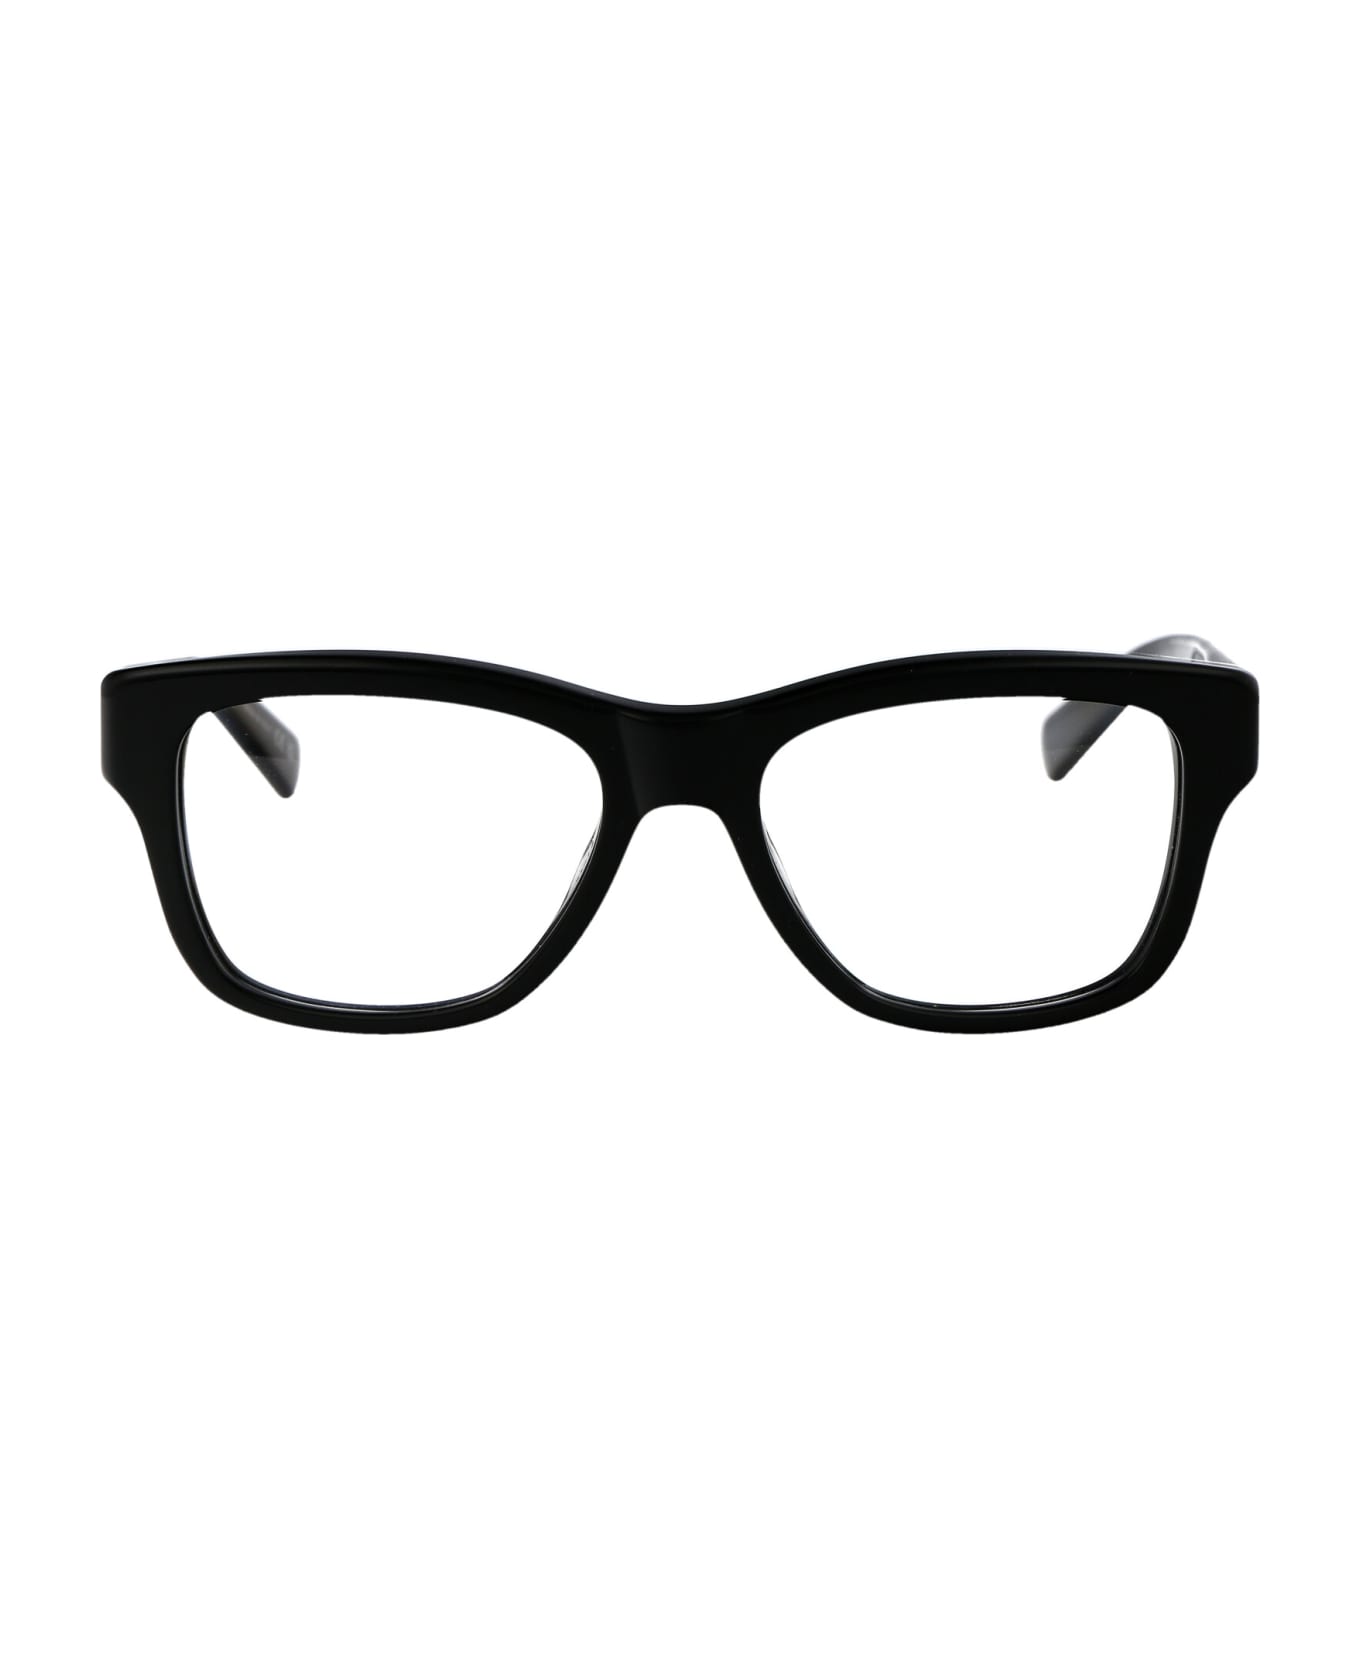 Saint Laurent Eyewear Sl 677 Glasses - 001 BLACK BLACK TRANSPARENT アイウェア